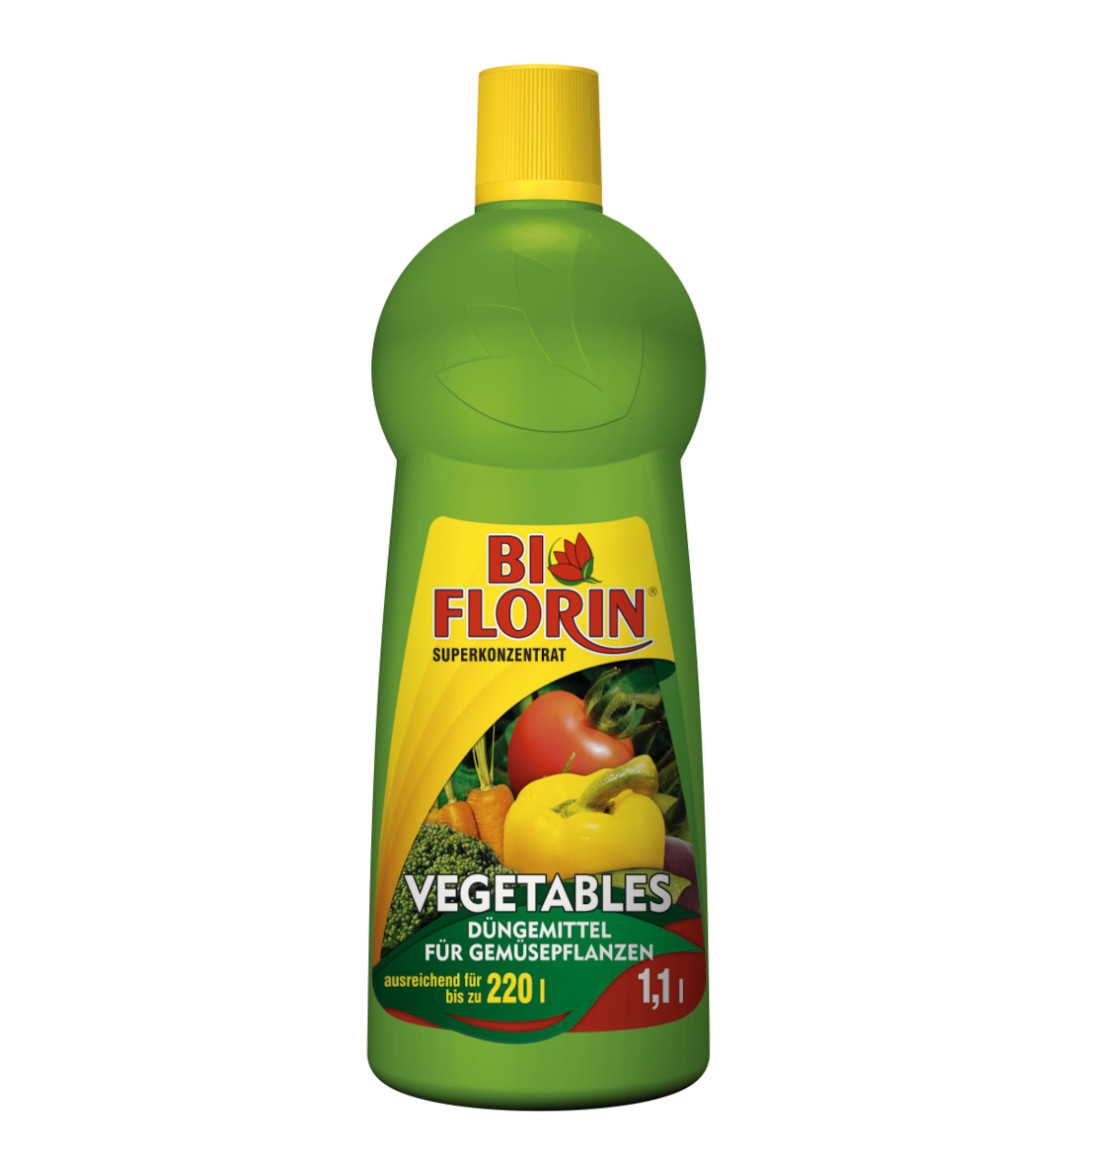 Bi Florin Vegetables Gemüsepflanzendünger Superkonzentrat 1,1 Liter